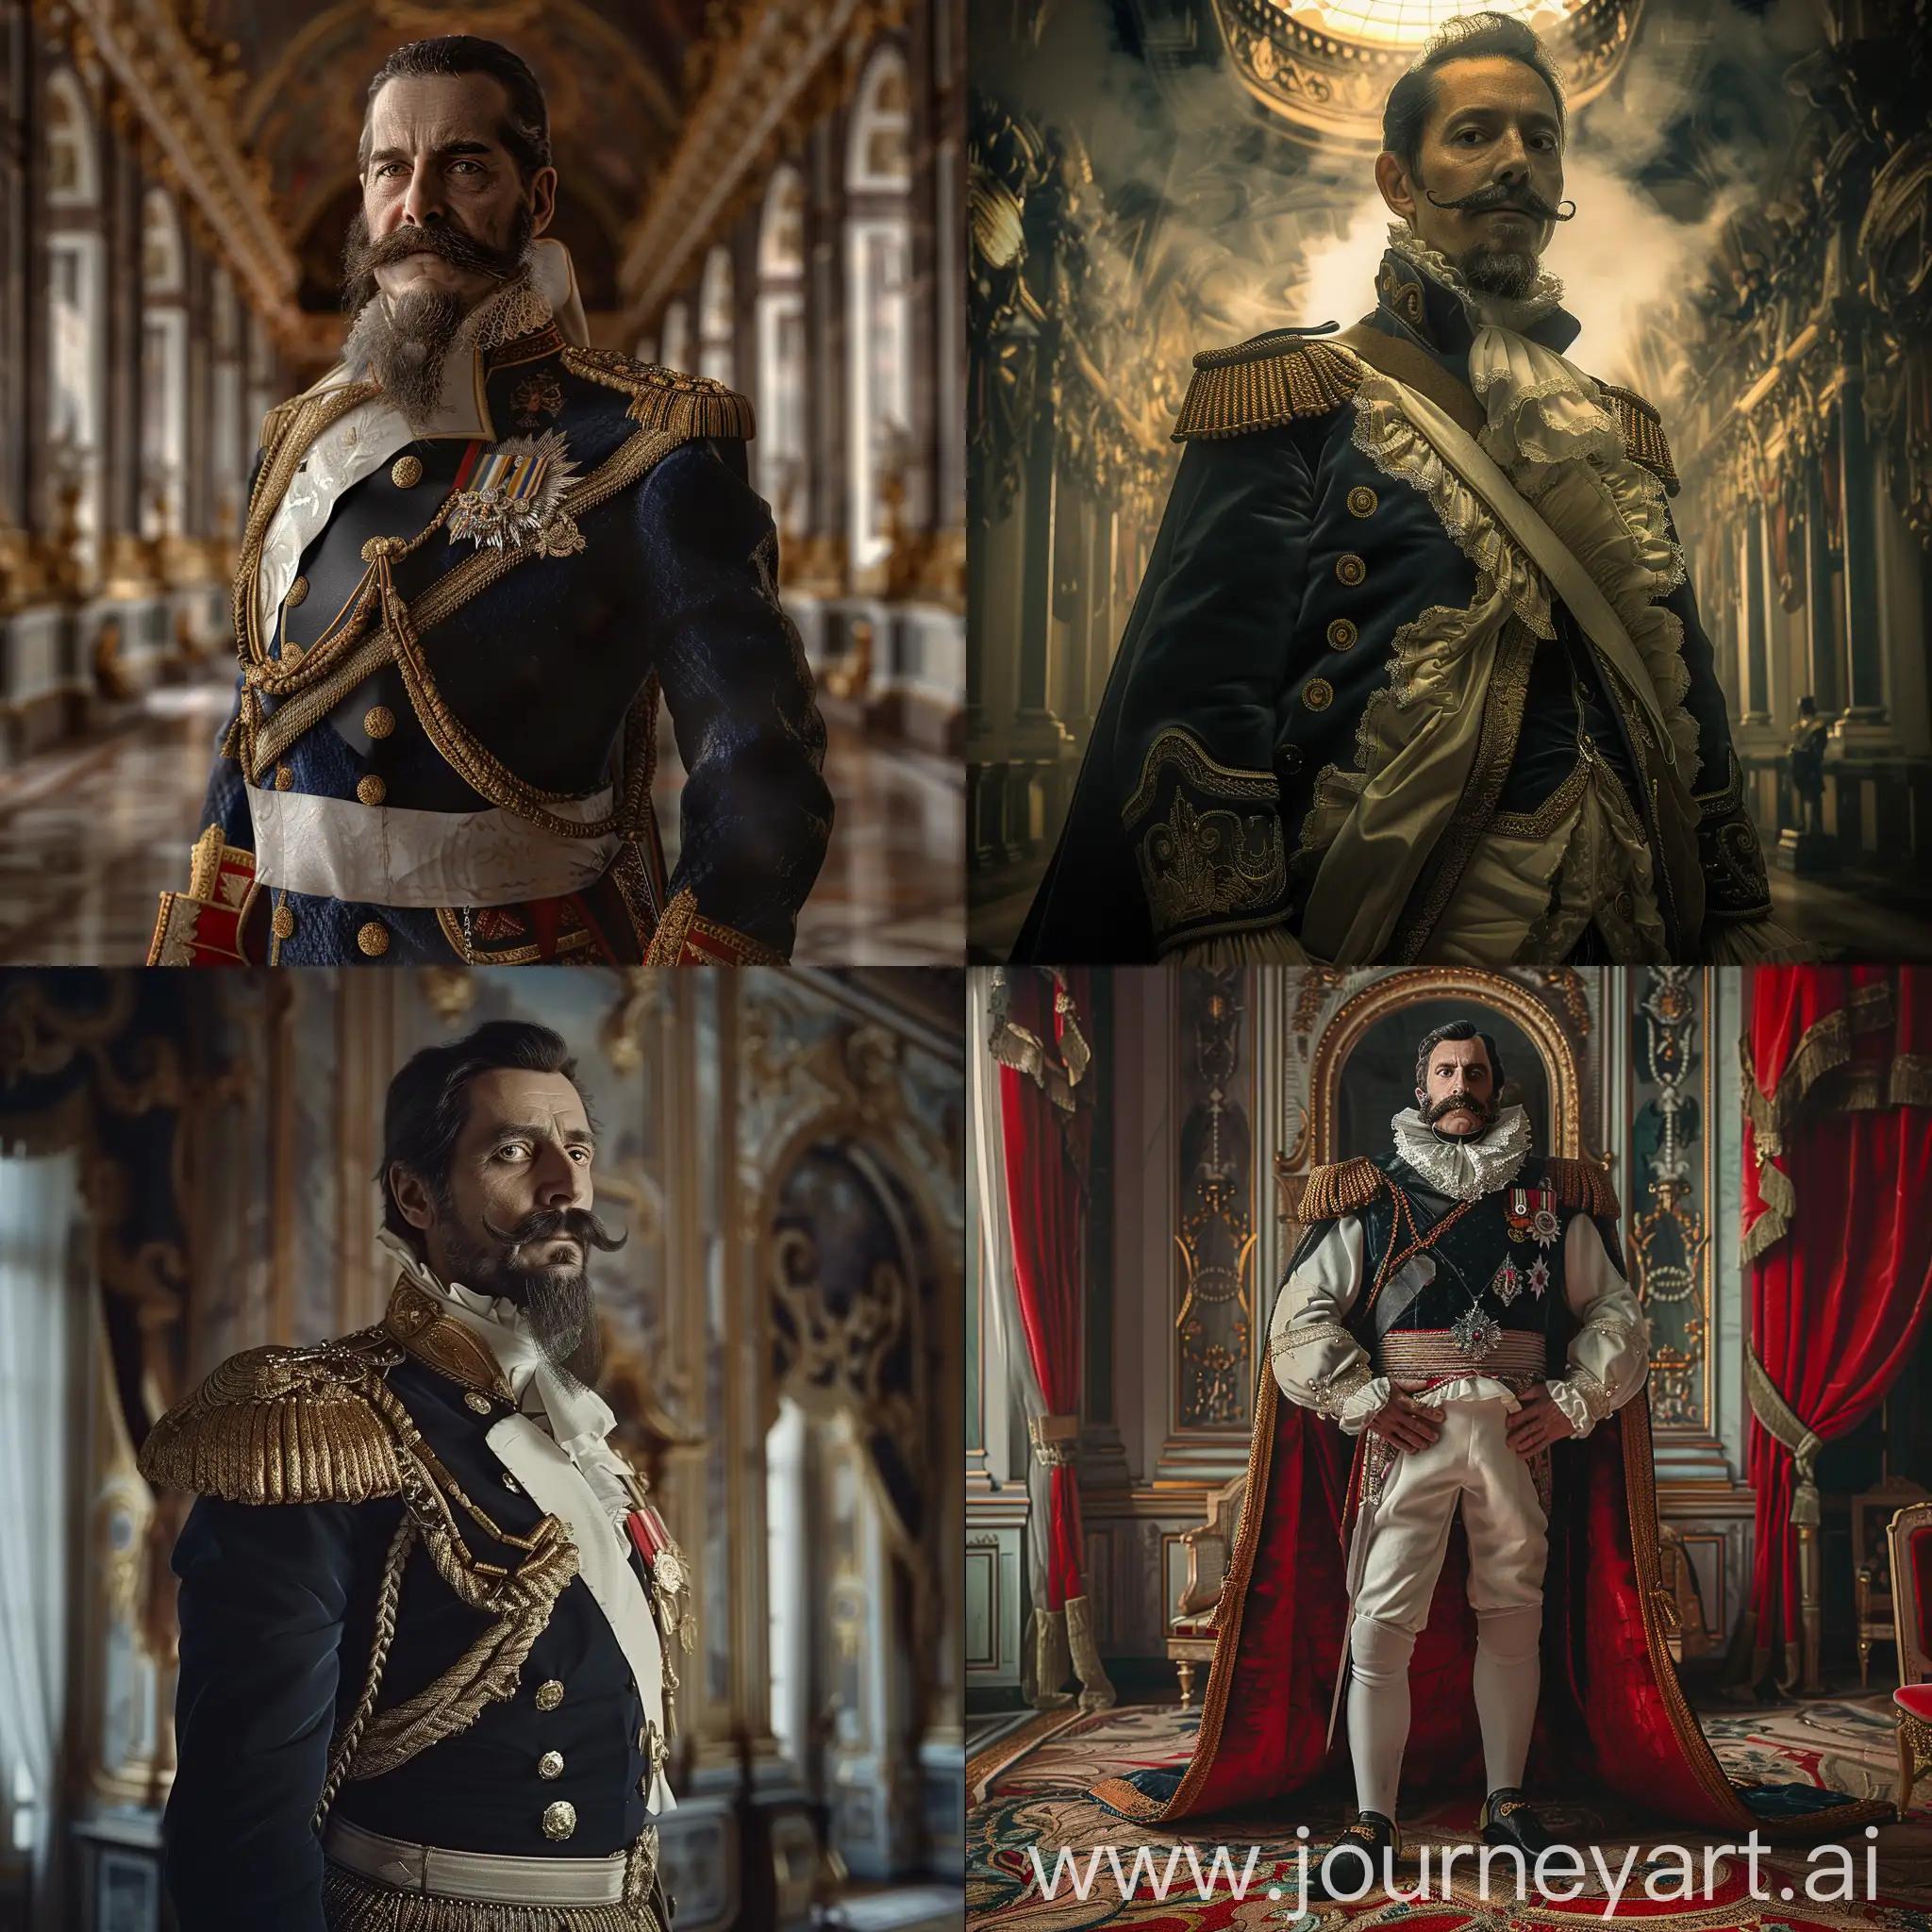 Napoleon-III-Standing-Proud-in-Palace-Attire